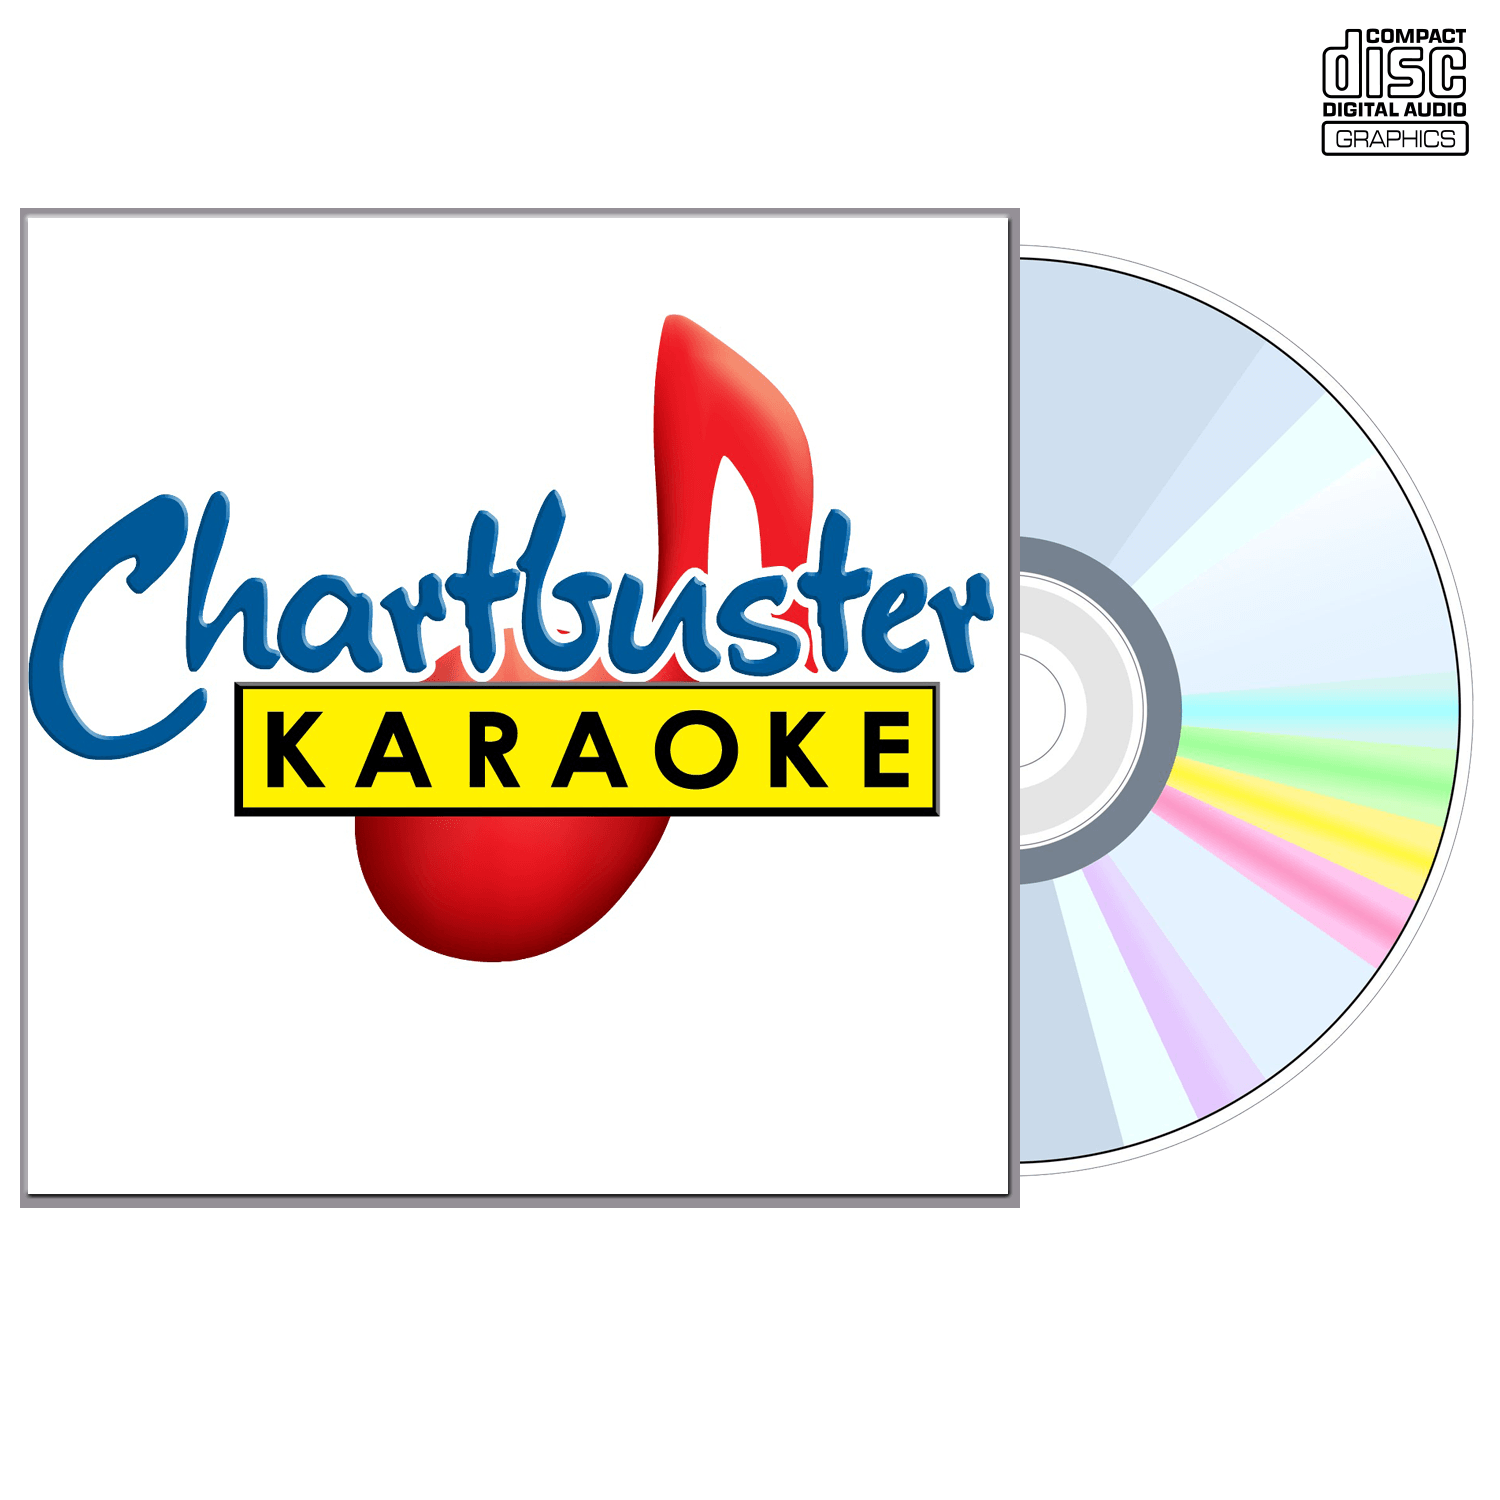 Billy Joel - CD+G - Chartbuster Karaoke - Karaoke Home Entertainment